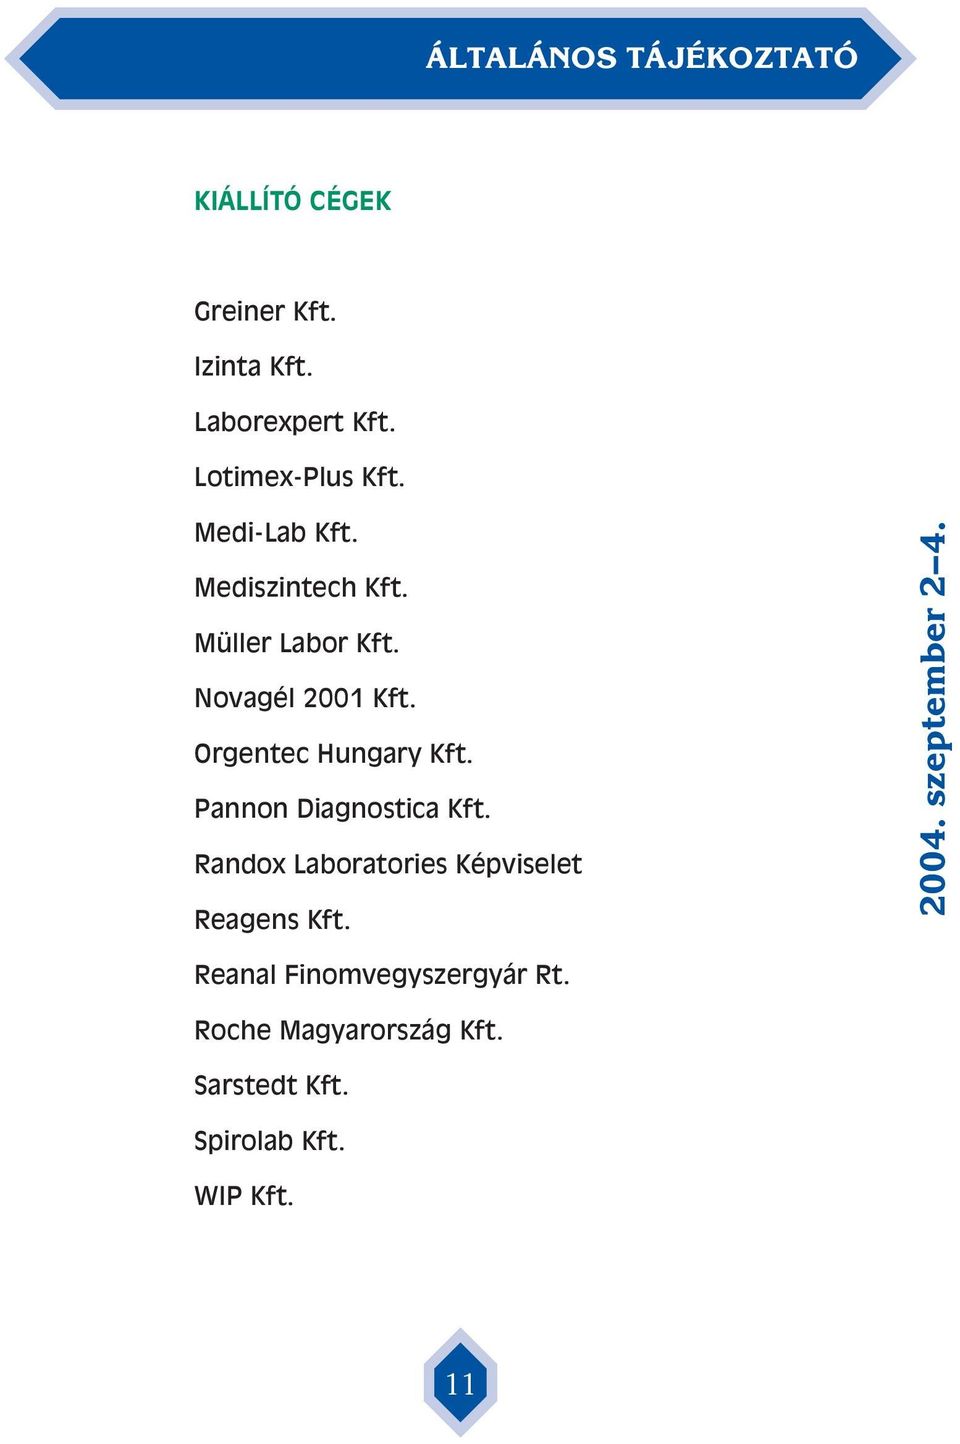 Orgentec Hungary Kft. Pannon Diagnostica Kft. Randox Laboratories Képviselet Reagens Kft.